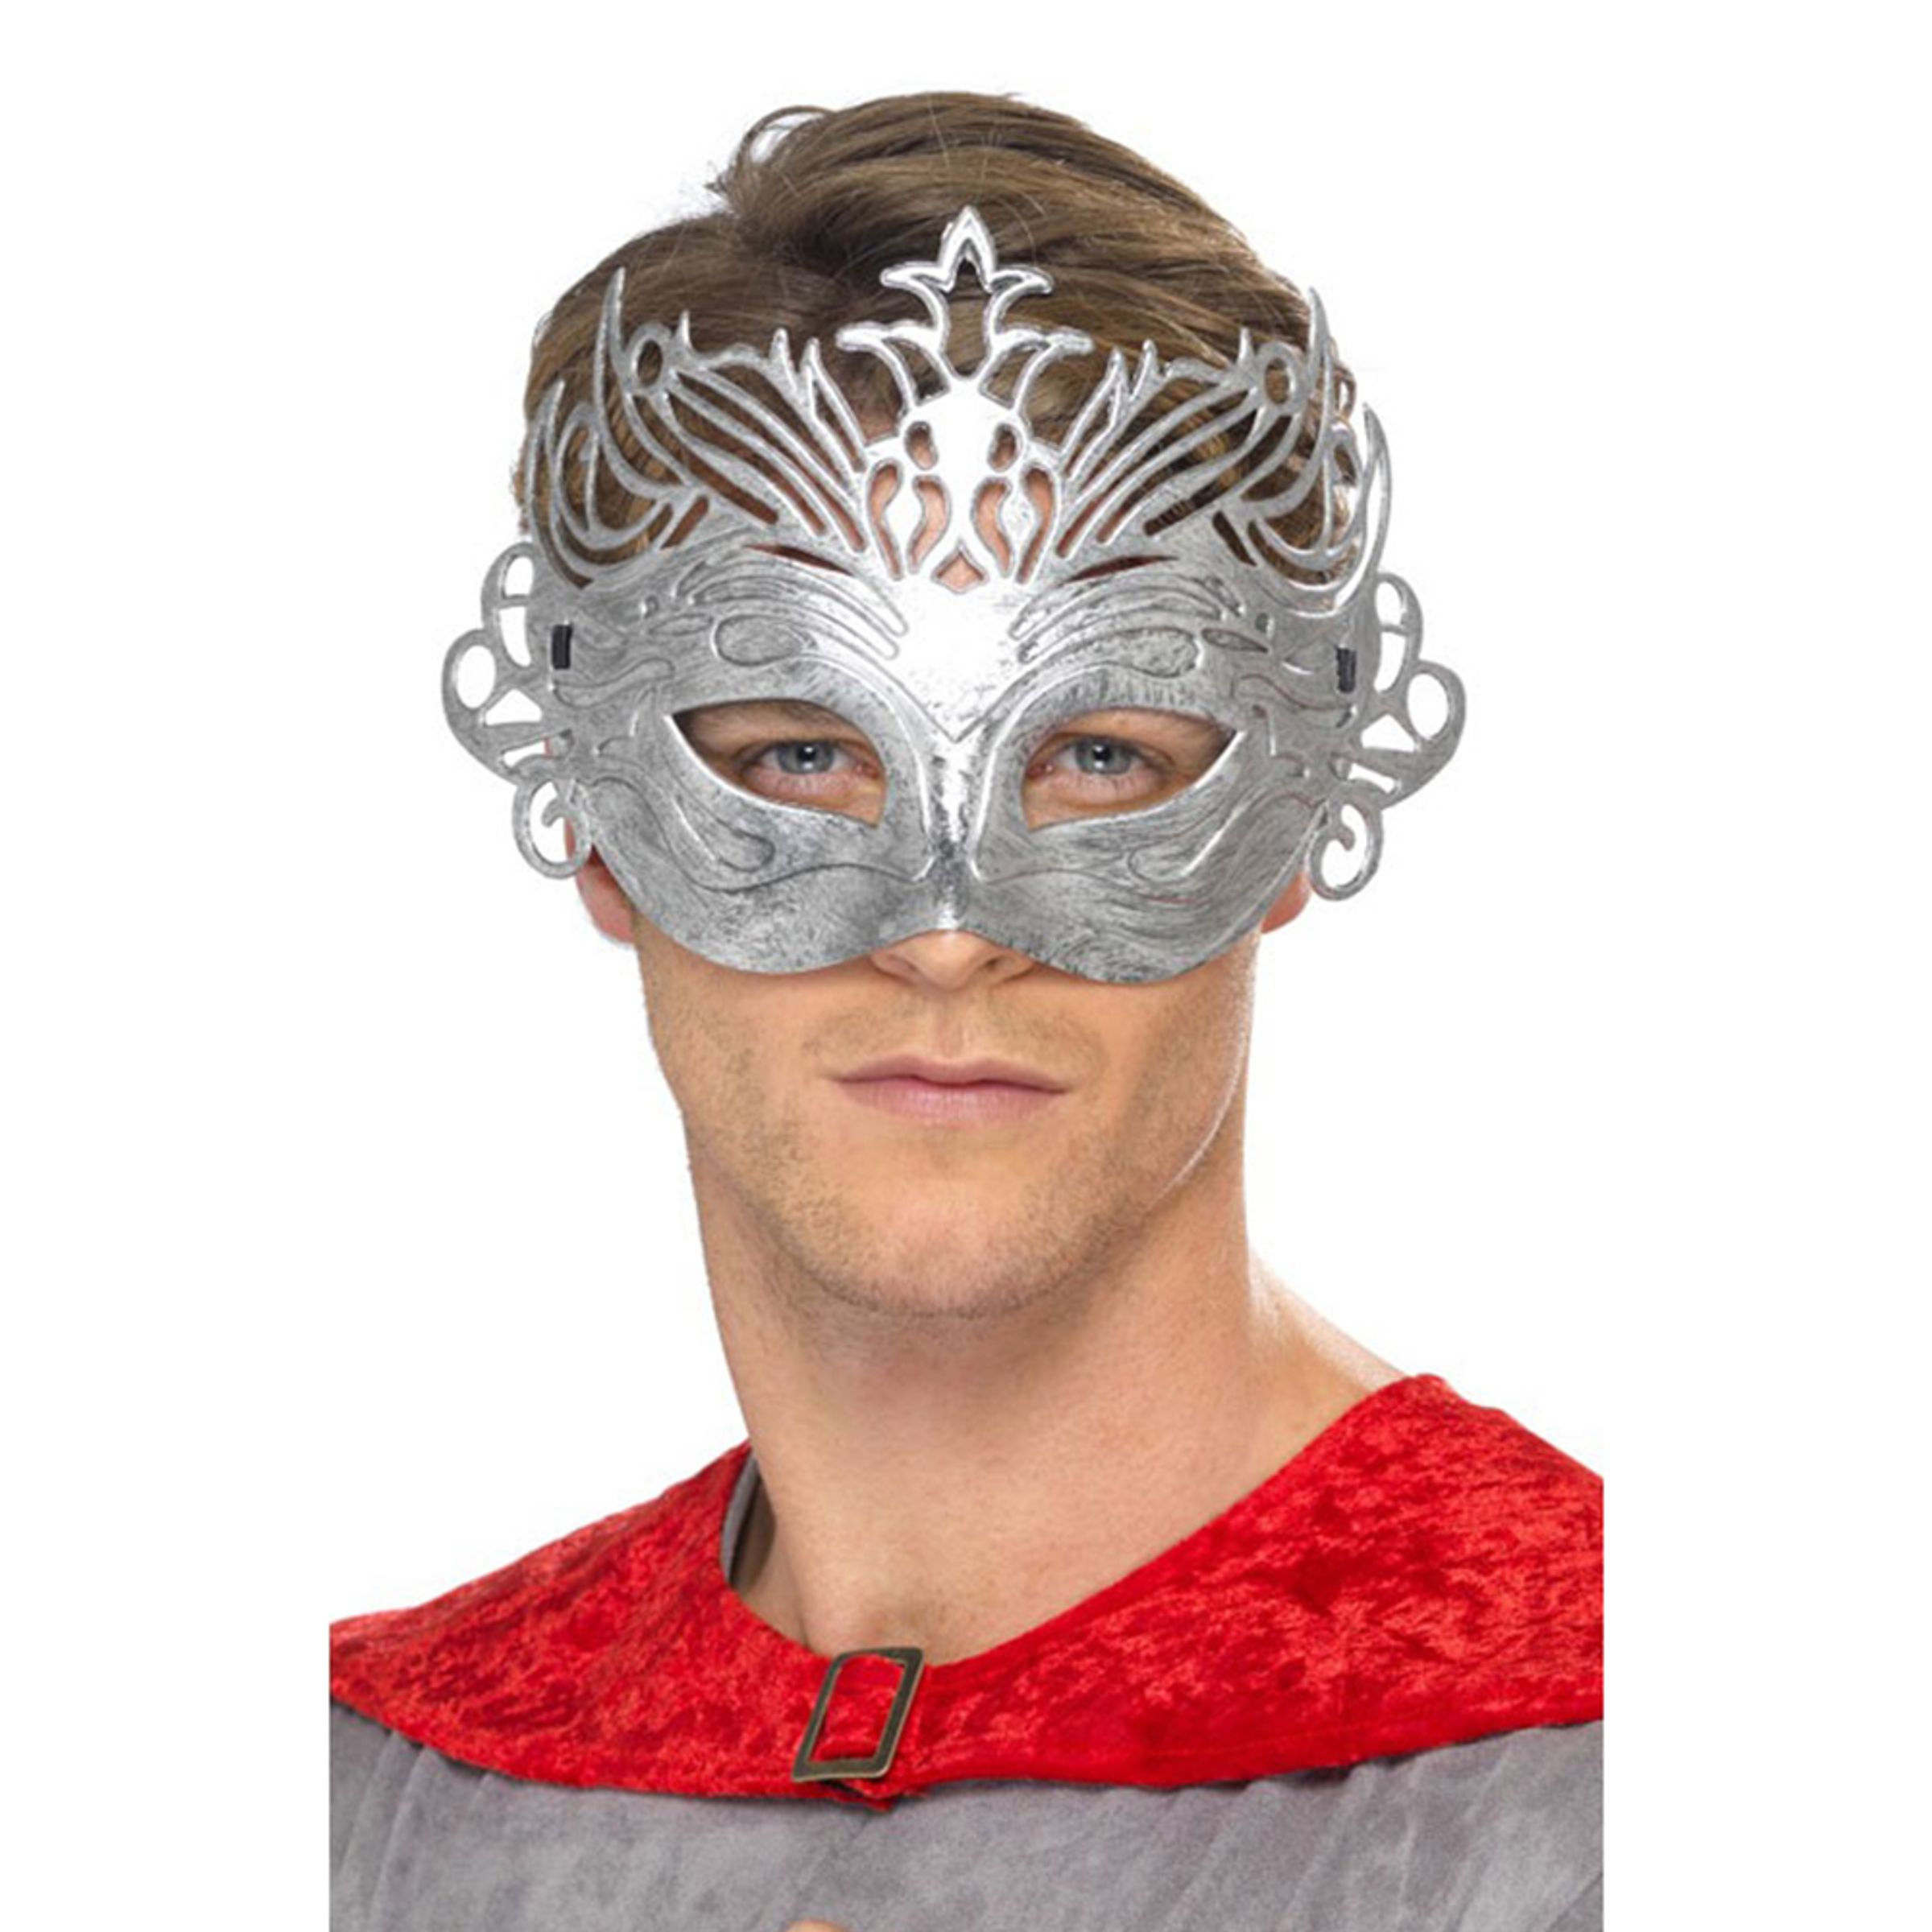 Colombian Silver Ögonmask - One size